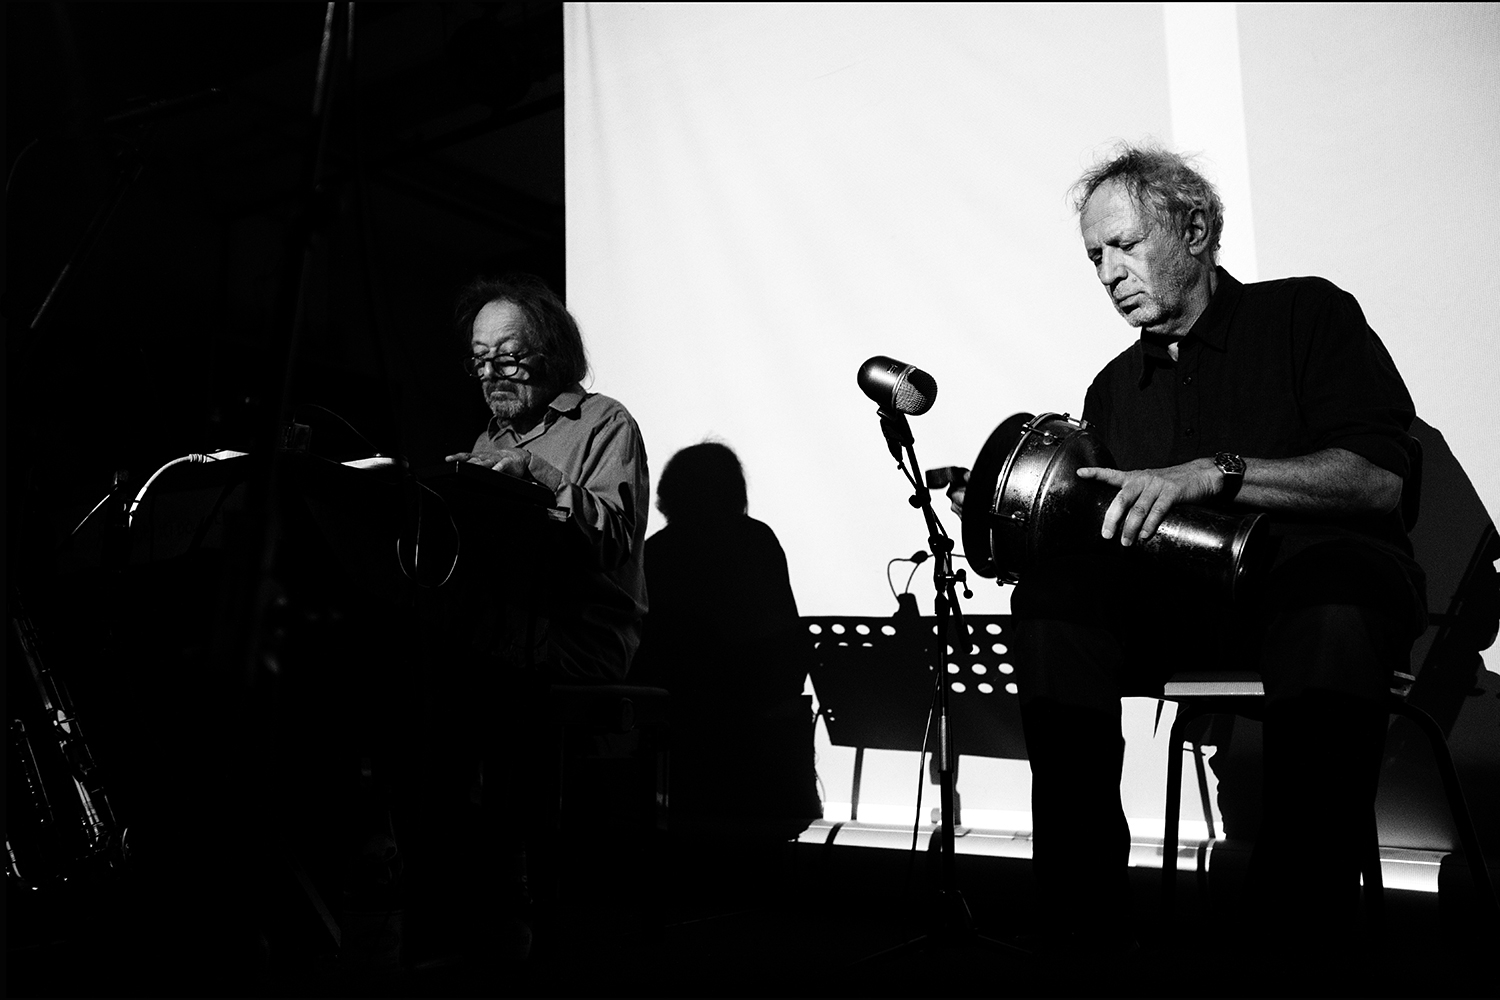 Benjamin Lew & Steven Brown & Marc Hollander by Laurent Orseau - Concert - Les Ateliers Claus - Brussels, Belgium #7